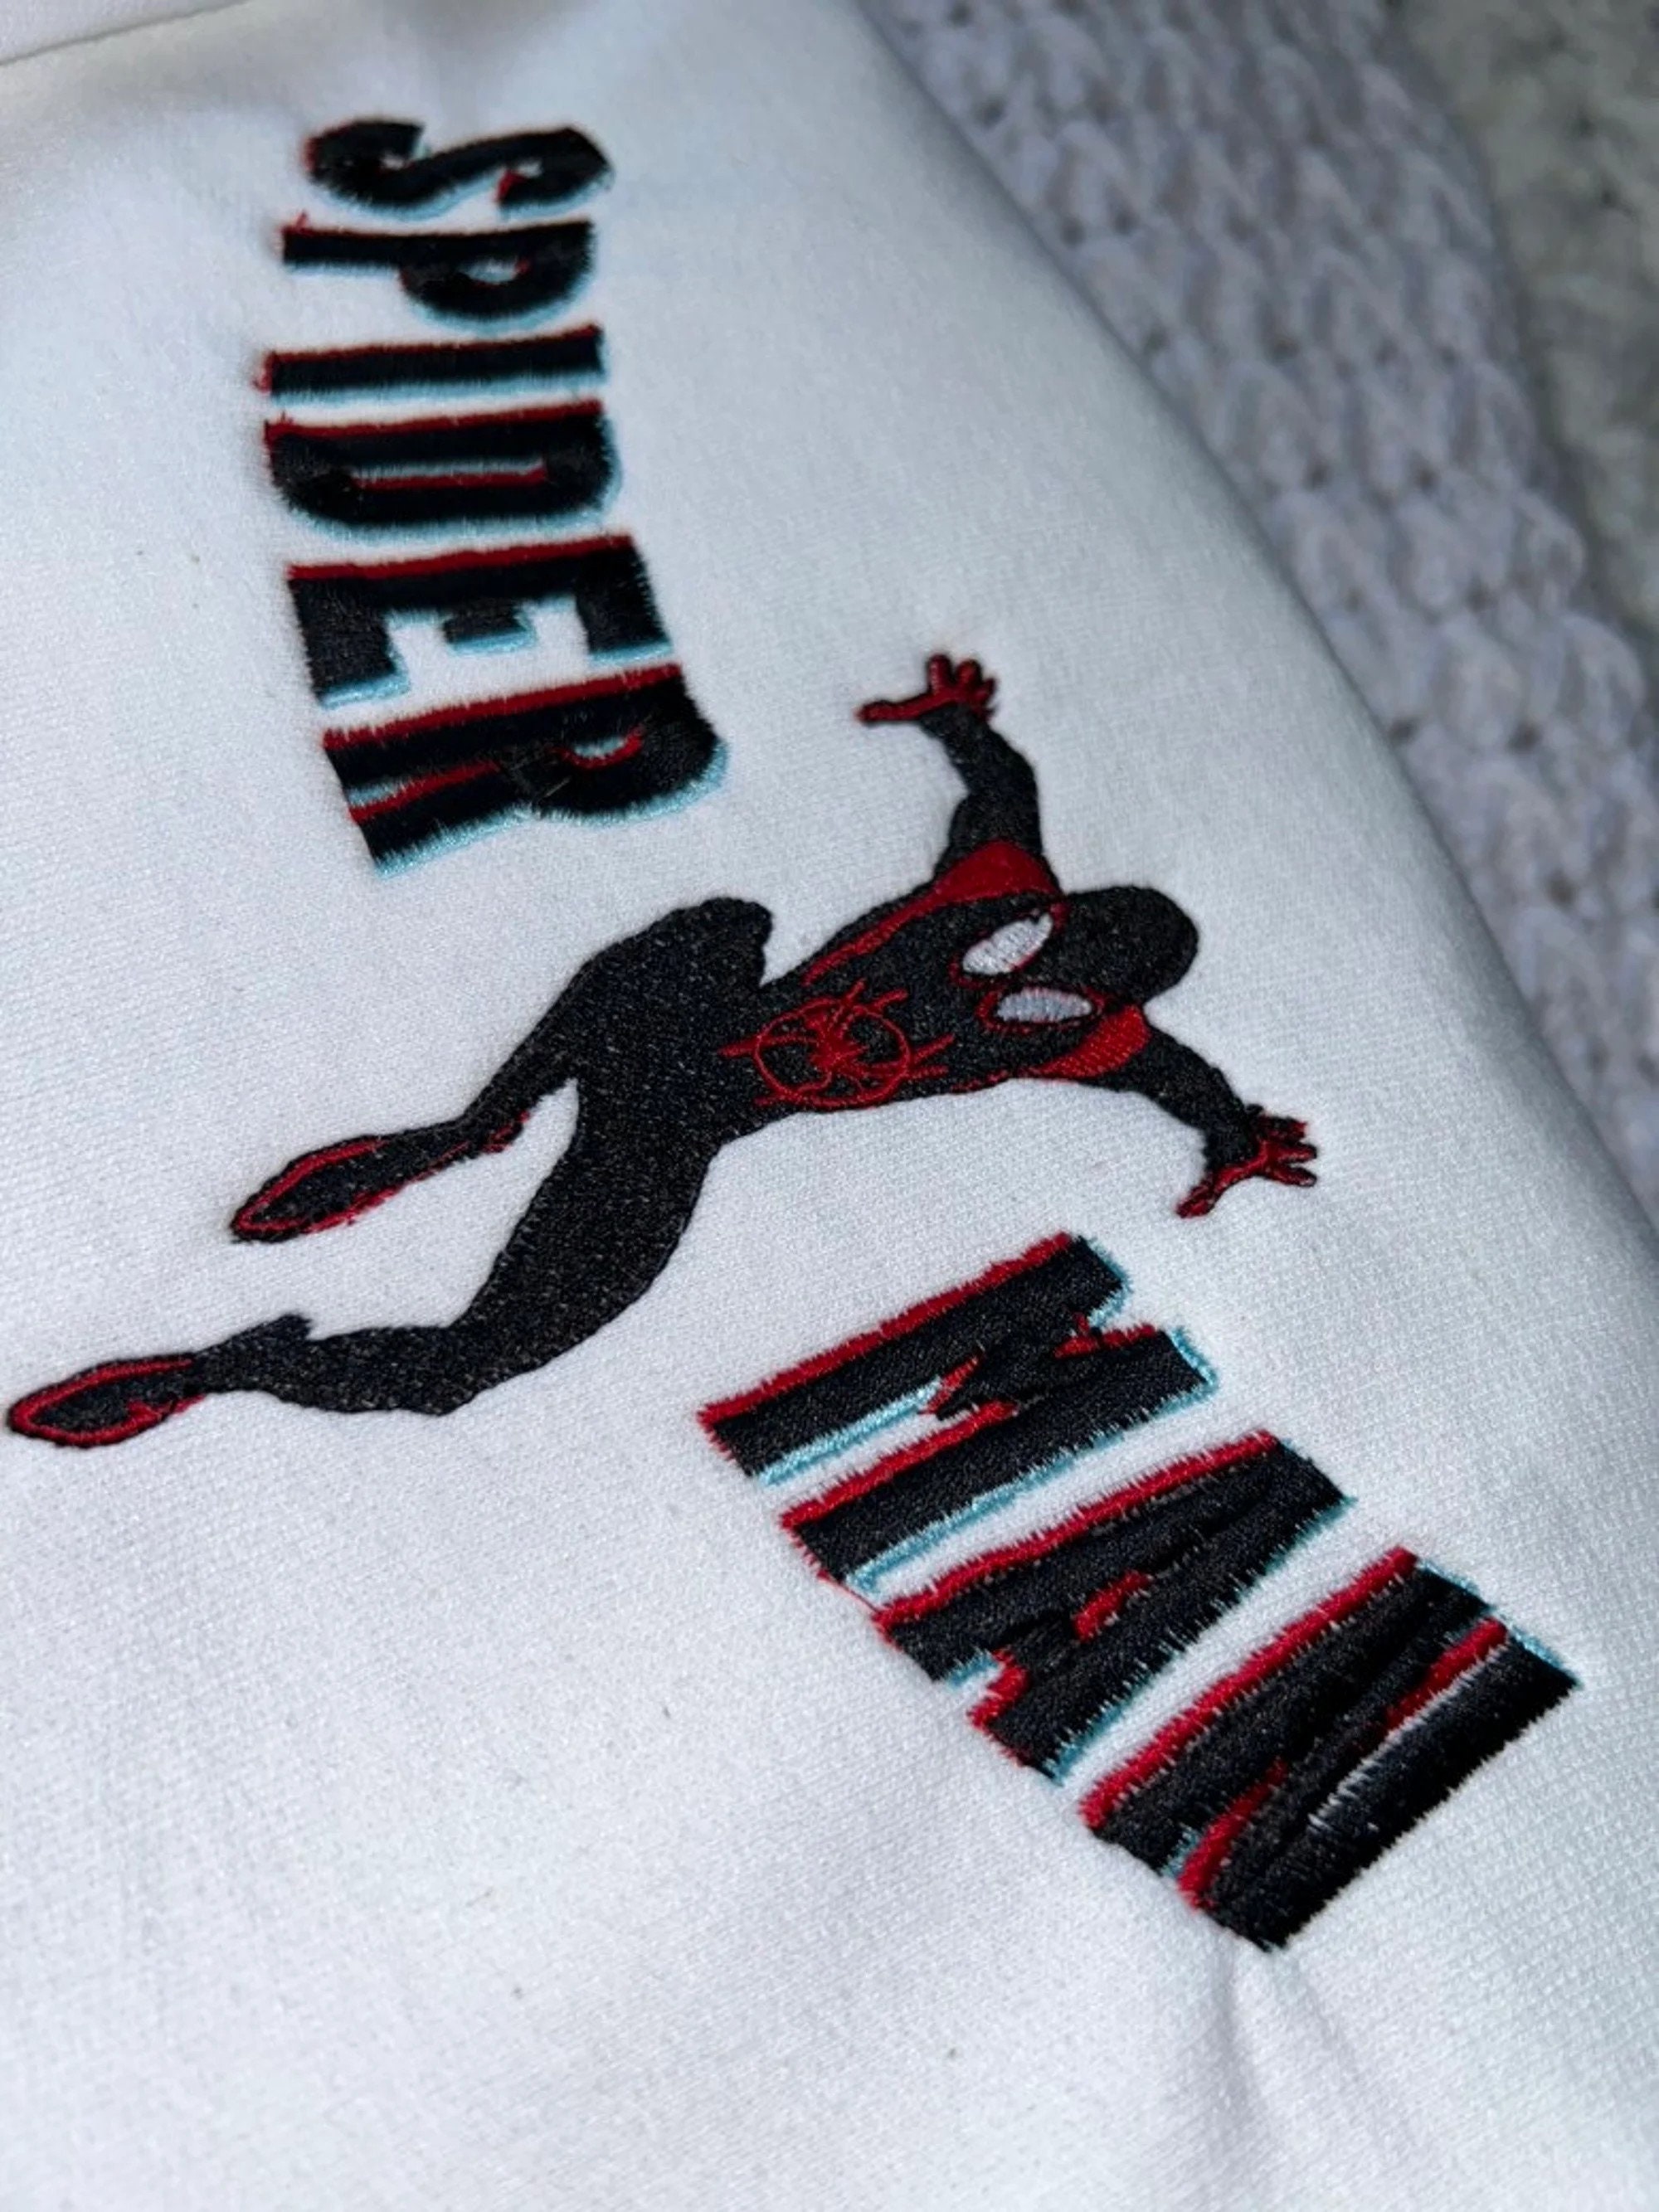 Discover Spiderman Crewneck, Spiderman Sweatshirt, Spiderman embroidered sweatshirt, Vintage, No Way home, Birthday, Miles Morales, spiderverse